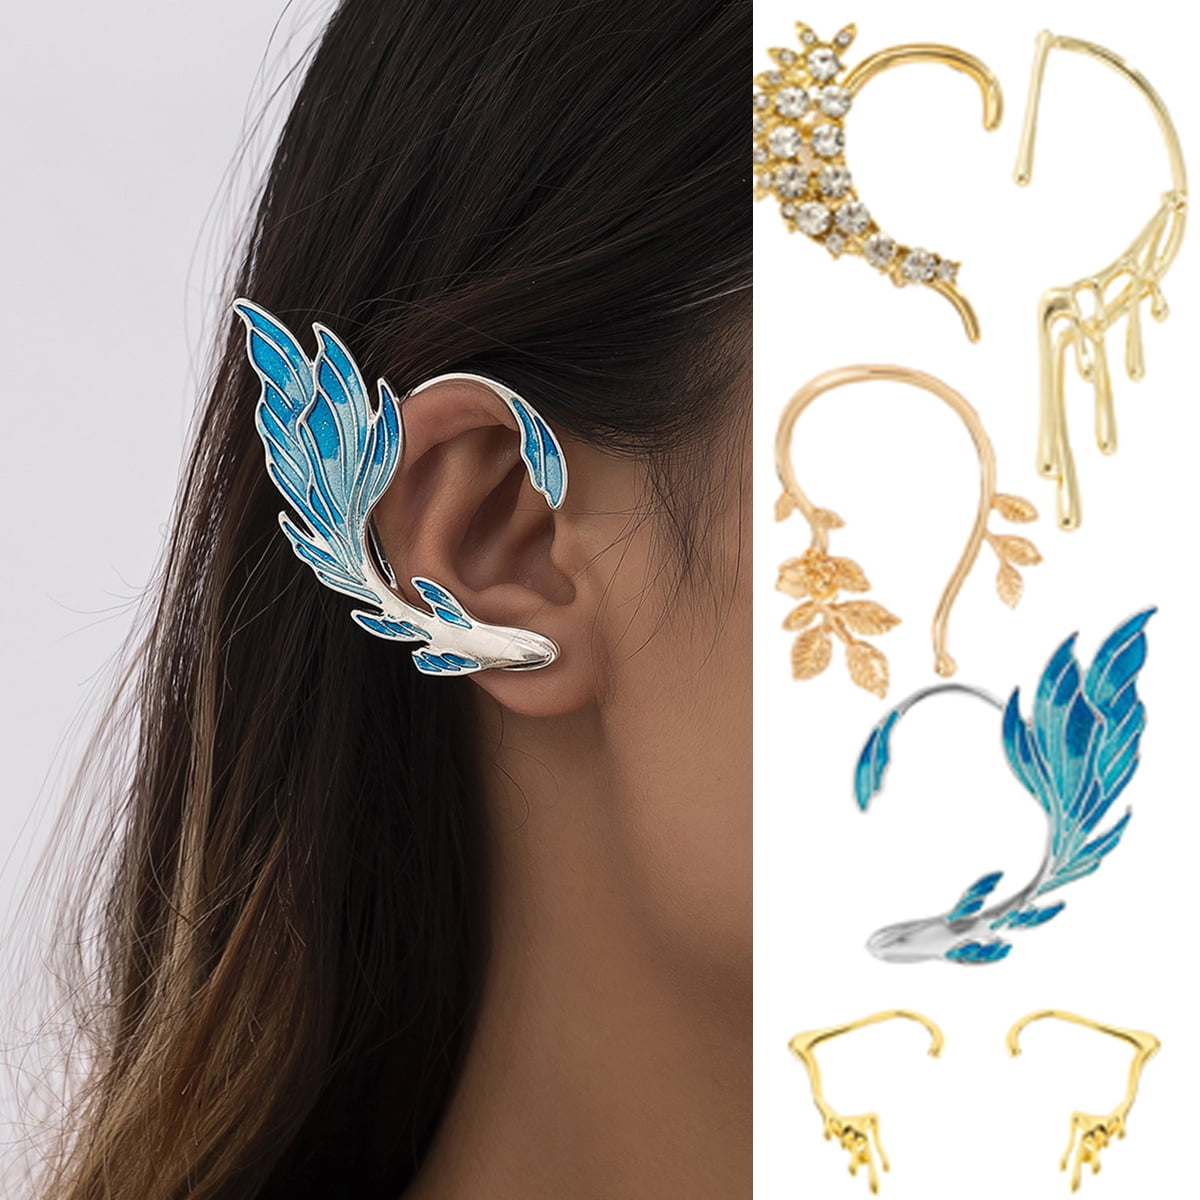 Buy Artificial Earrings Online in India | Latest Earrings design - ear cuff-sgquangbinhtourist.com.vn